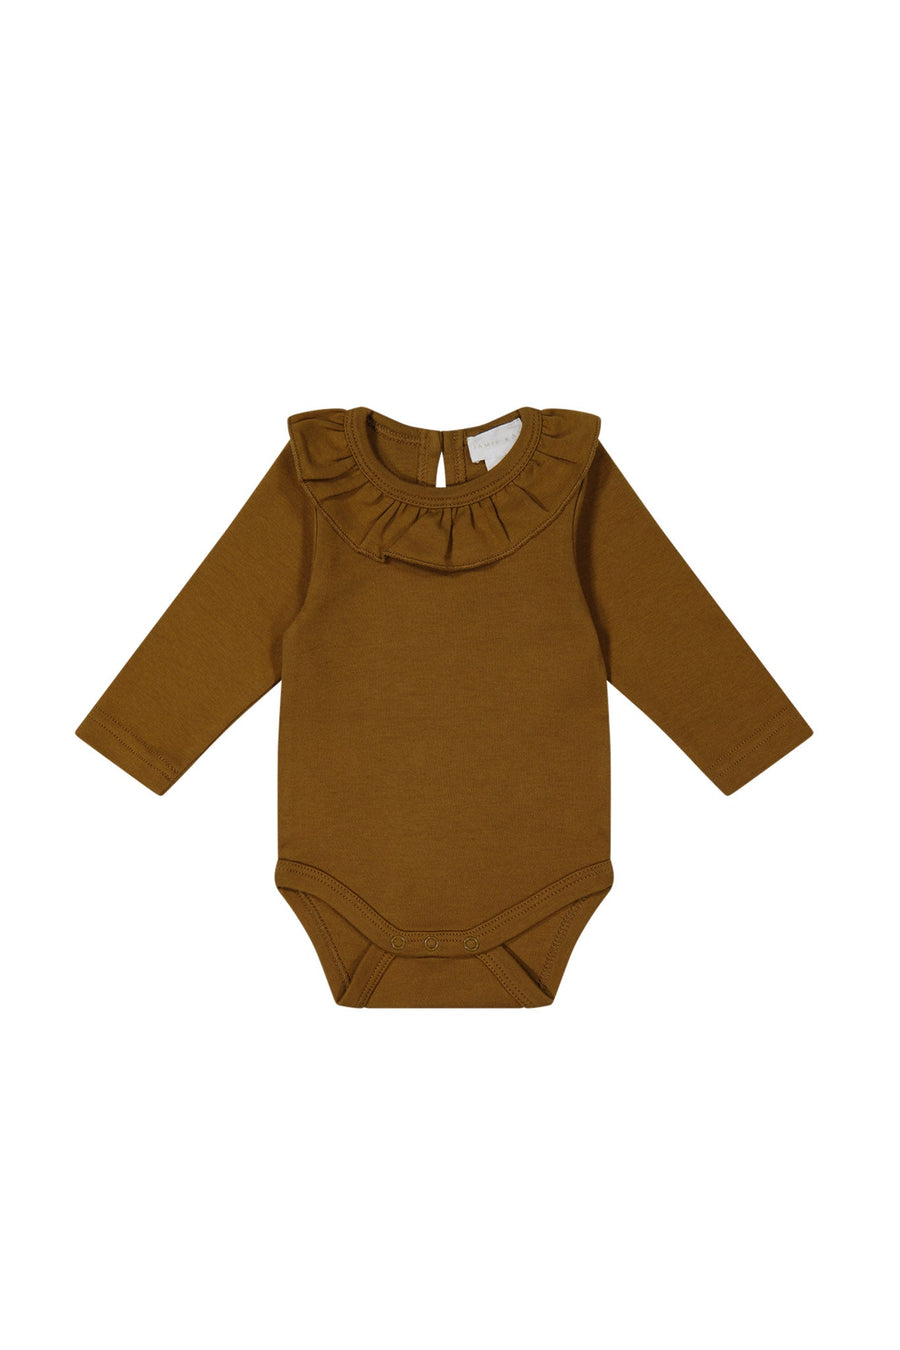 Pima Cotton Fayette Long Sleeve Bodysuit - Autumn Bronze Childrens Bodysuit from Jamie Kay USA